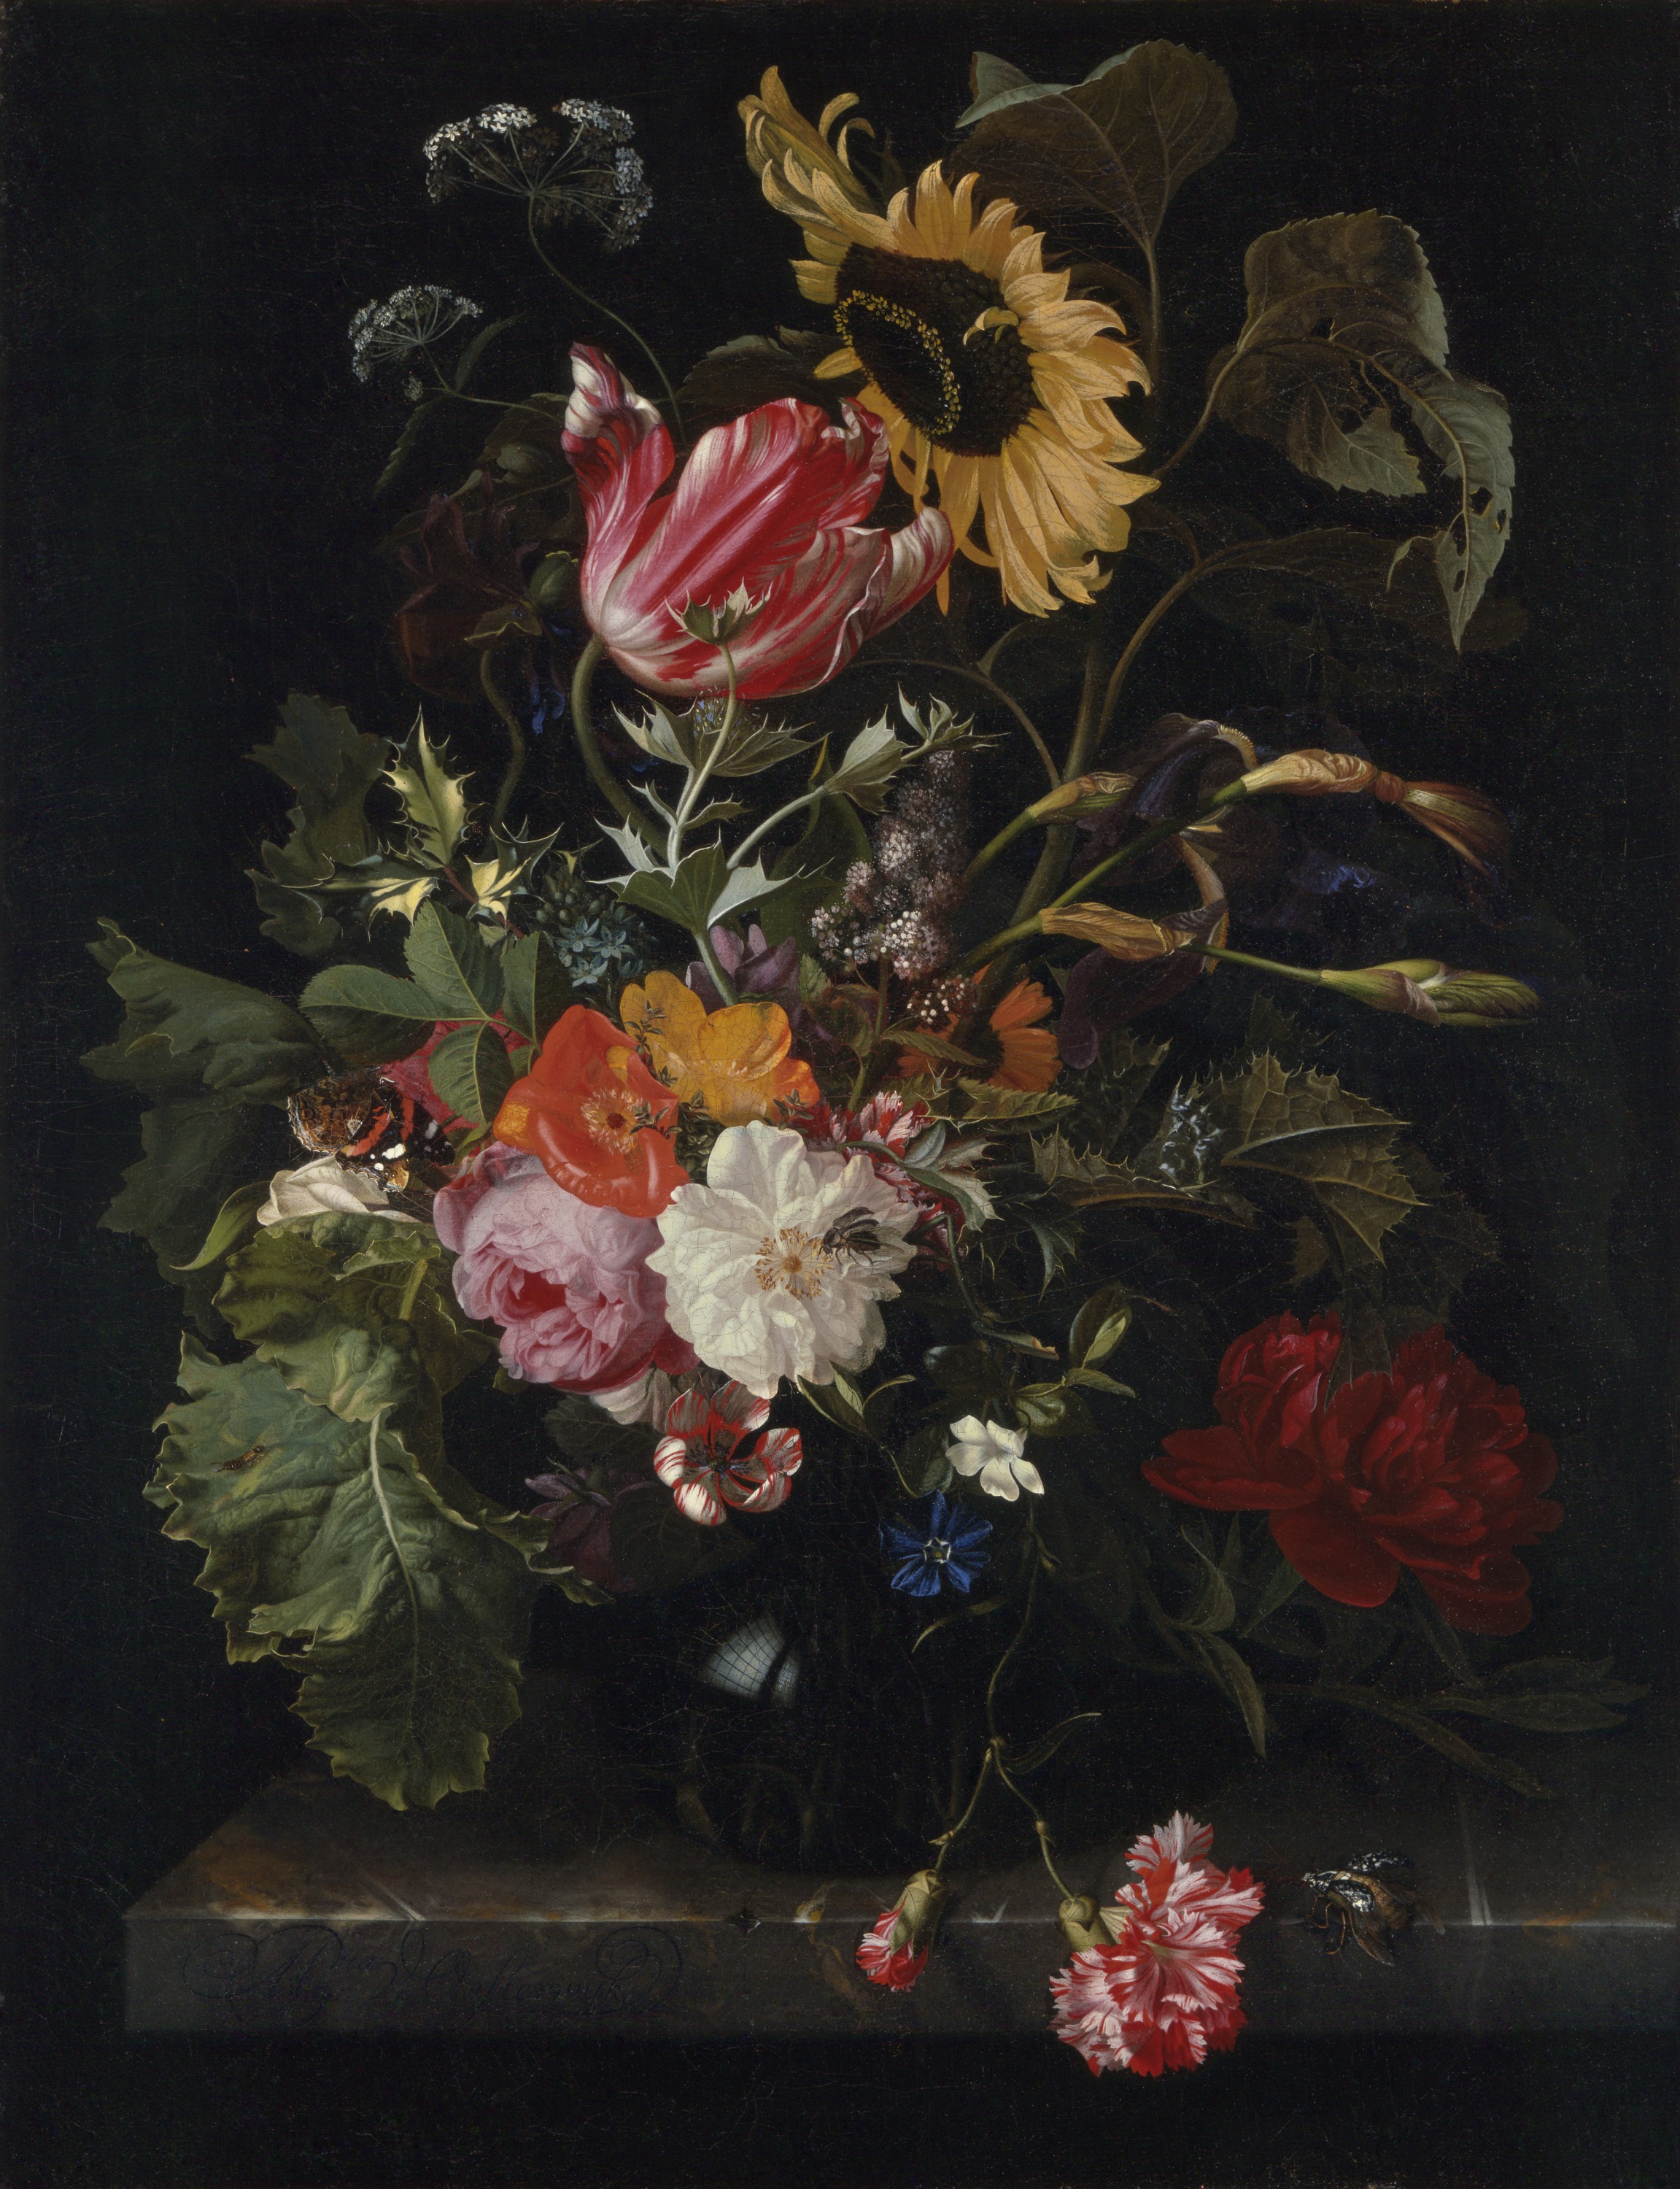 Bouquet of Flowers in a Vase by Maria van Oosterwijck - c. 1670s - 74 x 56 cm Denver Art Museum